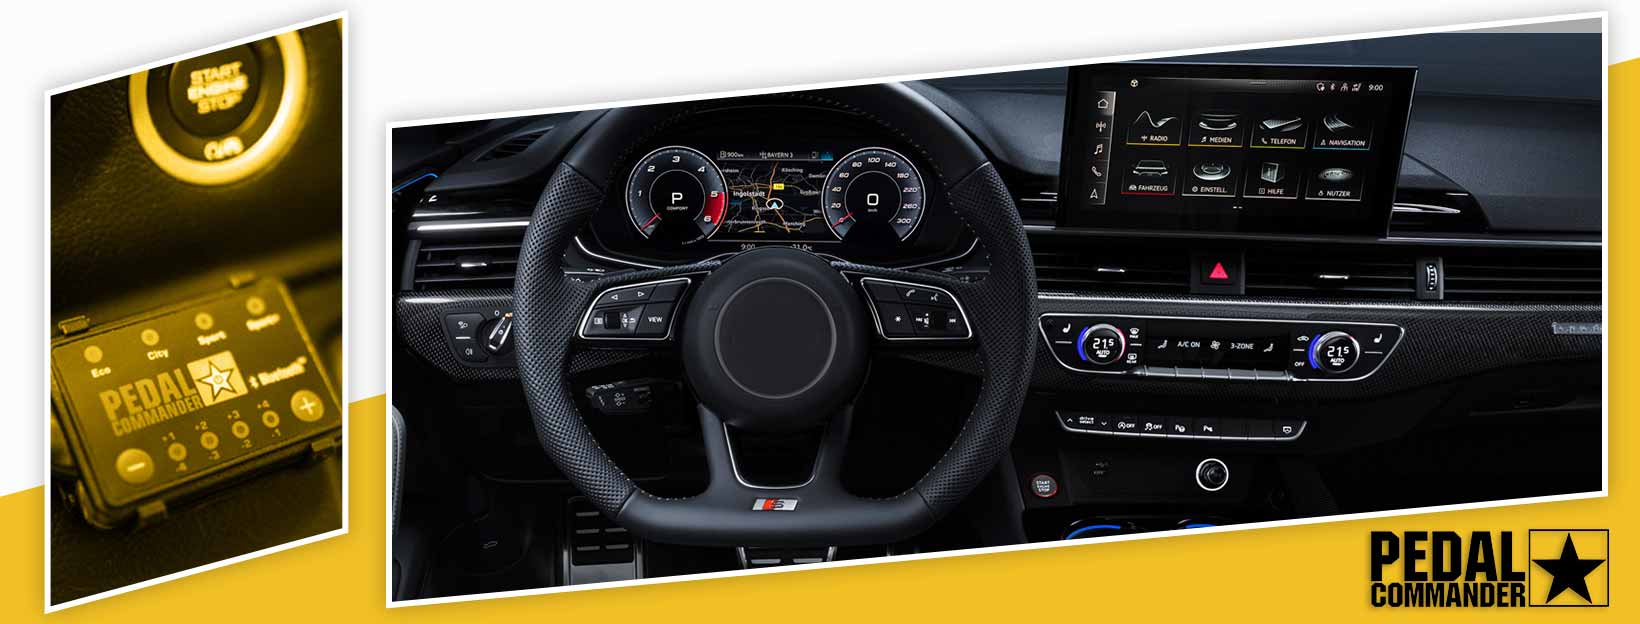 Pedal Commander for Audi A5 - interior